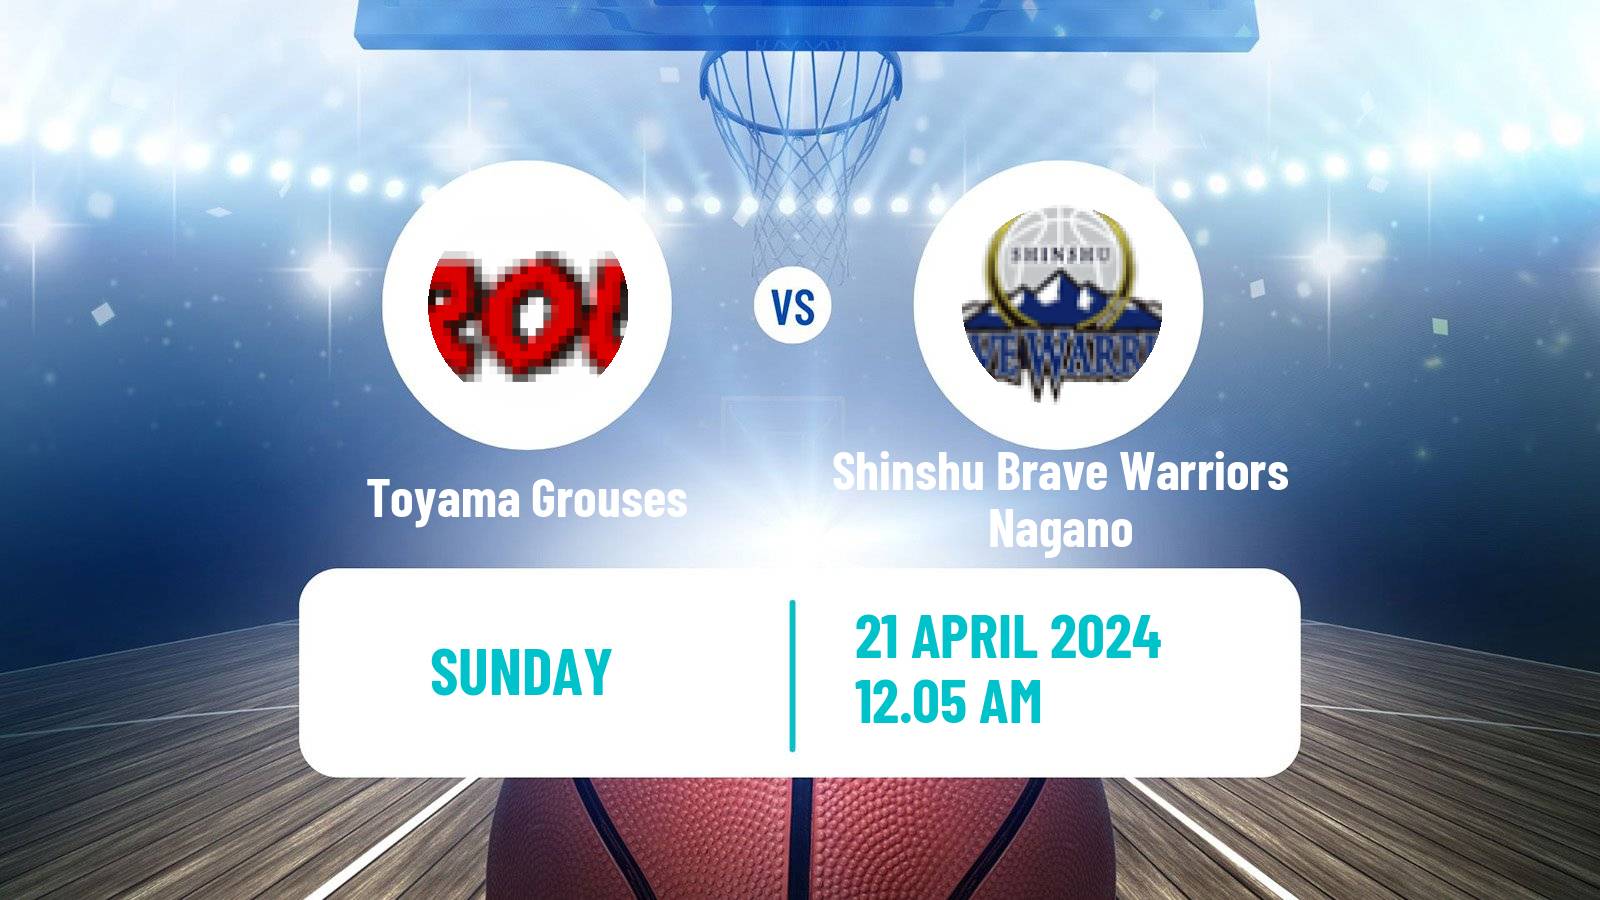 Basketball BJ League Toyama Grouses - Shinshu Brave Warriors Nagano